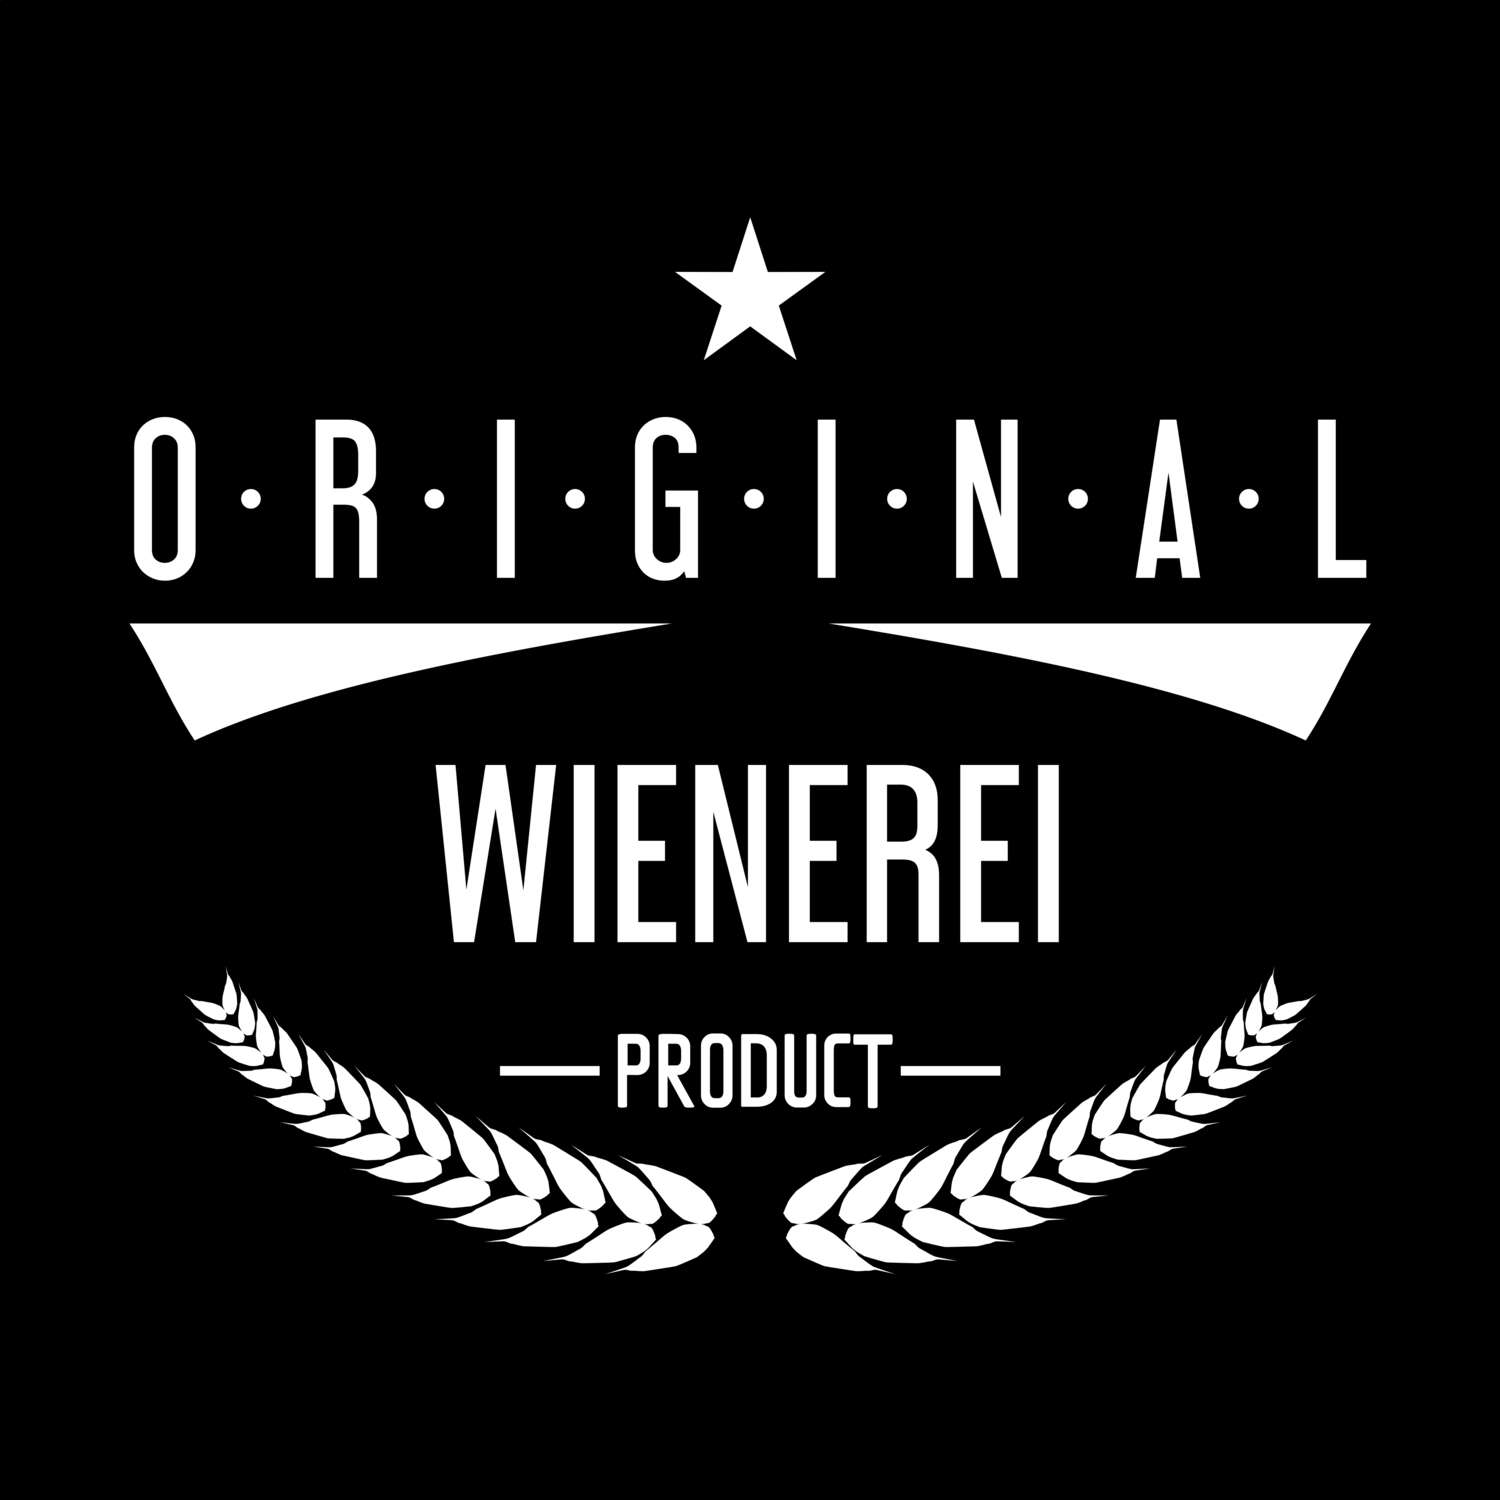 Wienerei T-Shirt »Original Product«